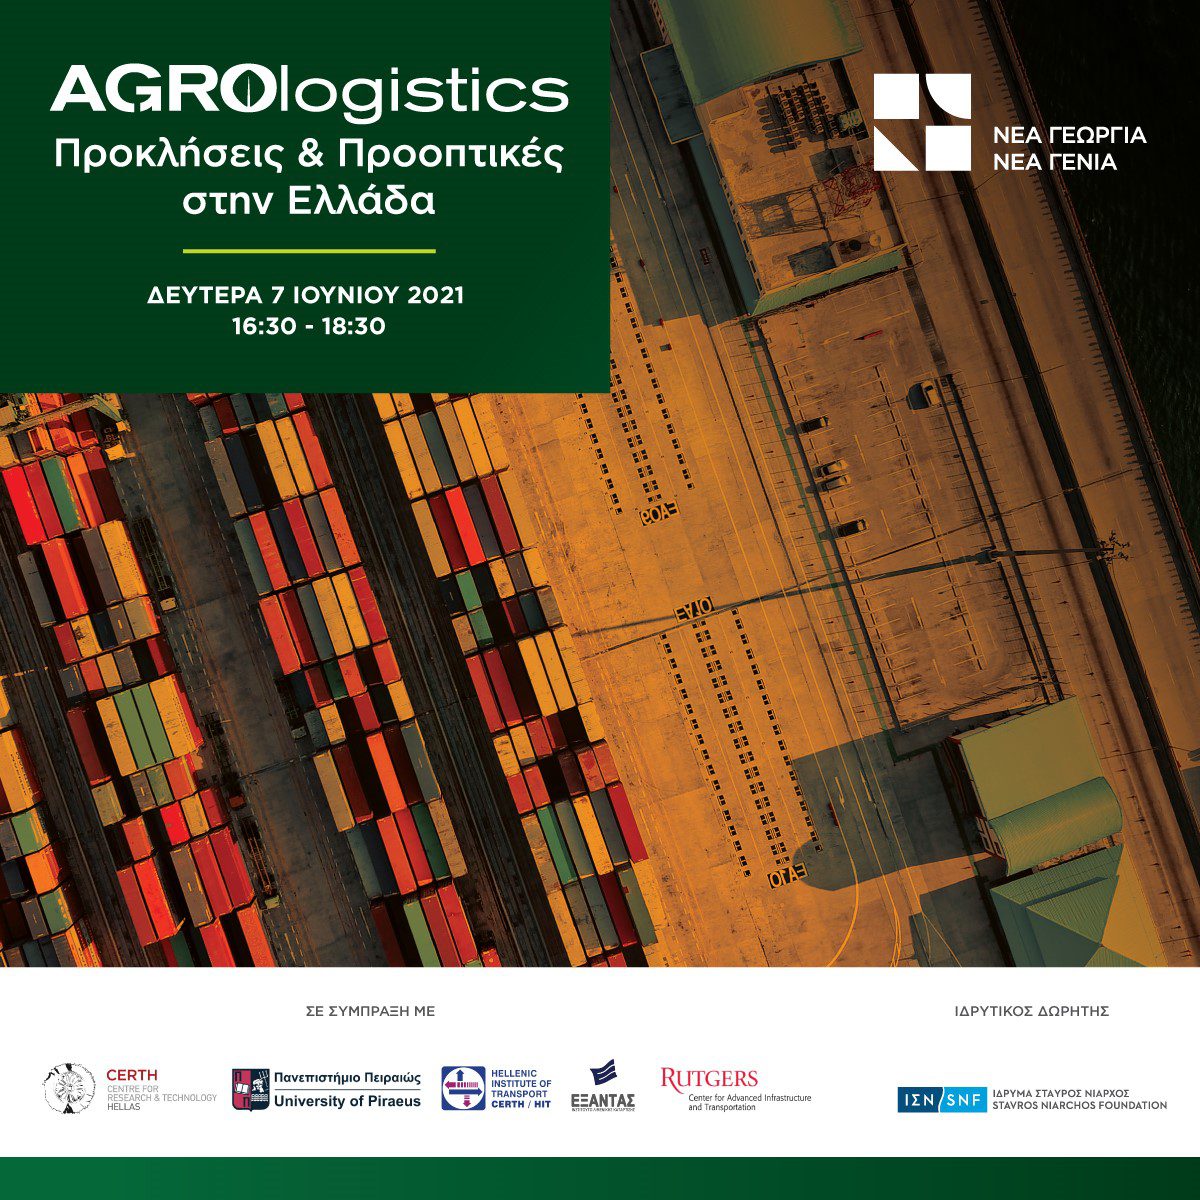 Agrologistics